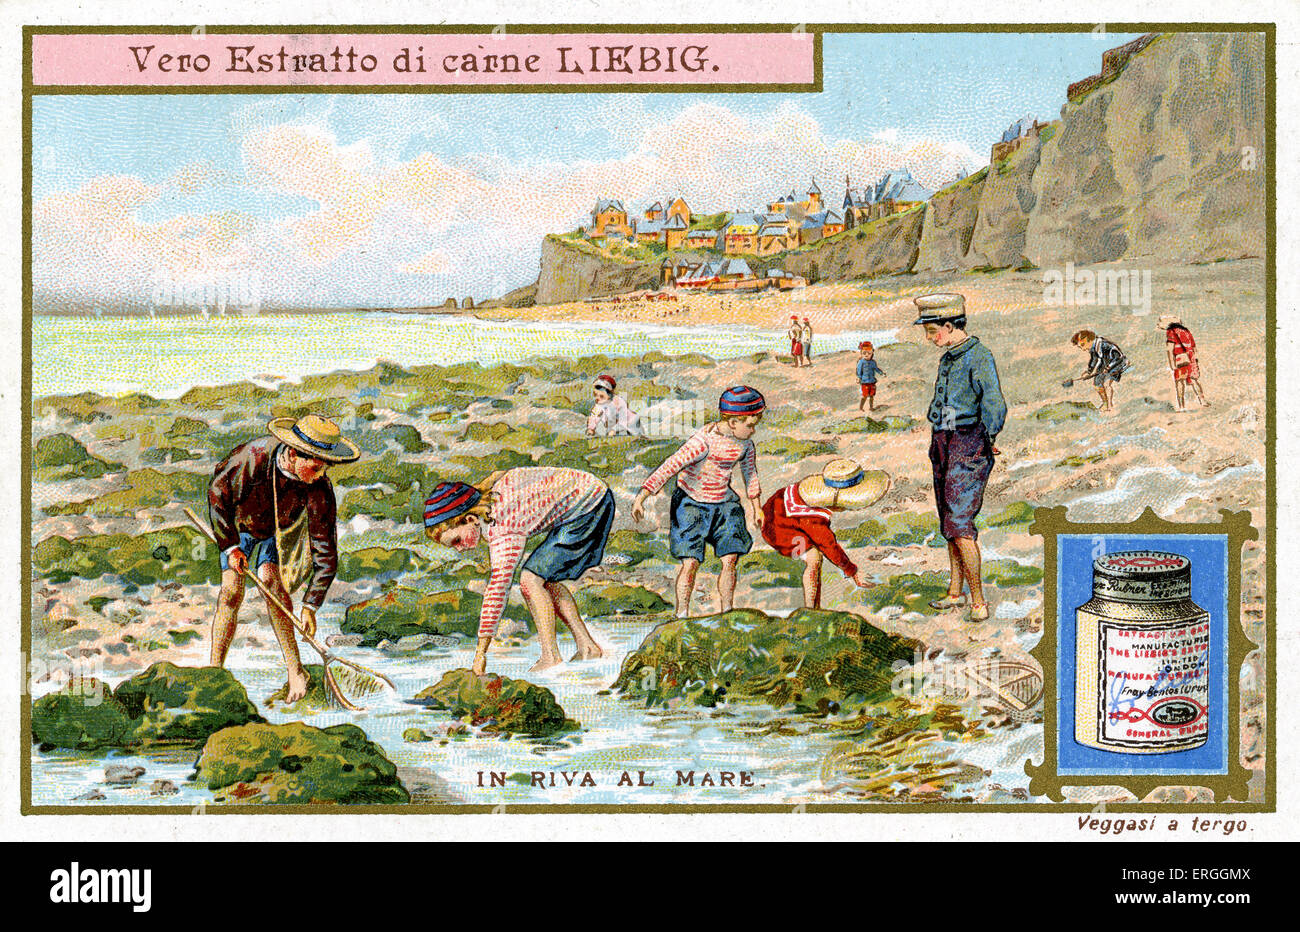 Am Meer: spielen im Fels-Pools. Illustration von 1910. Liebig-Sammelkartenspiel (Serie: In Riva Al Mare). Stockfoto